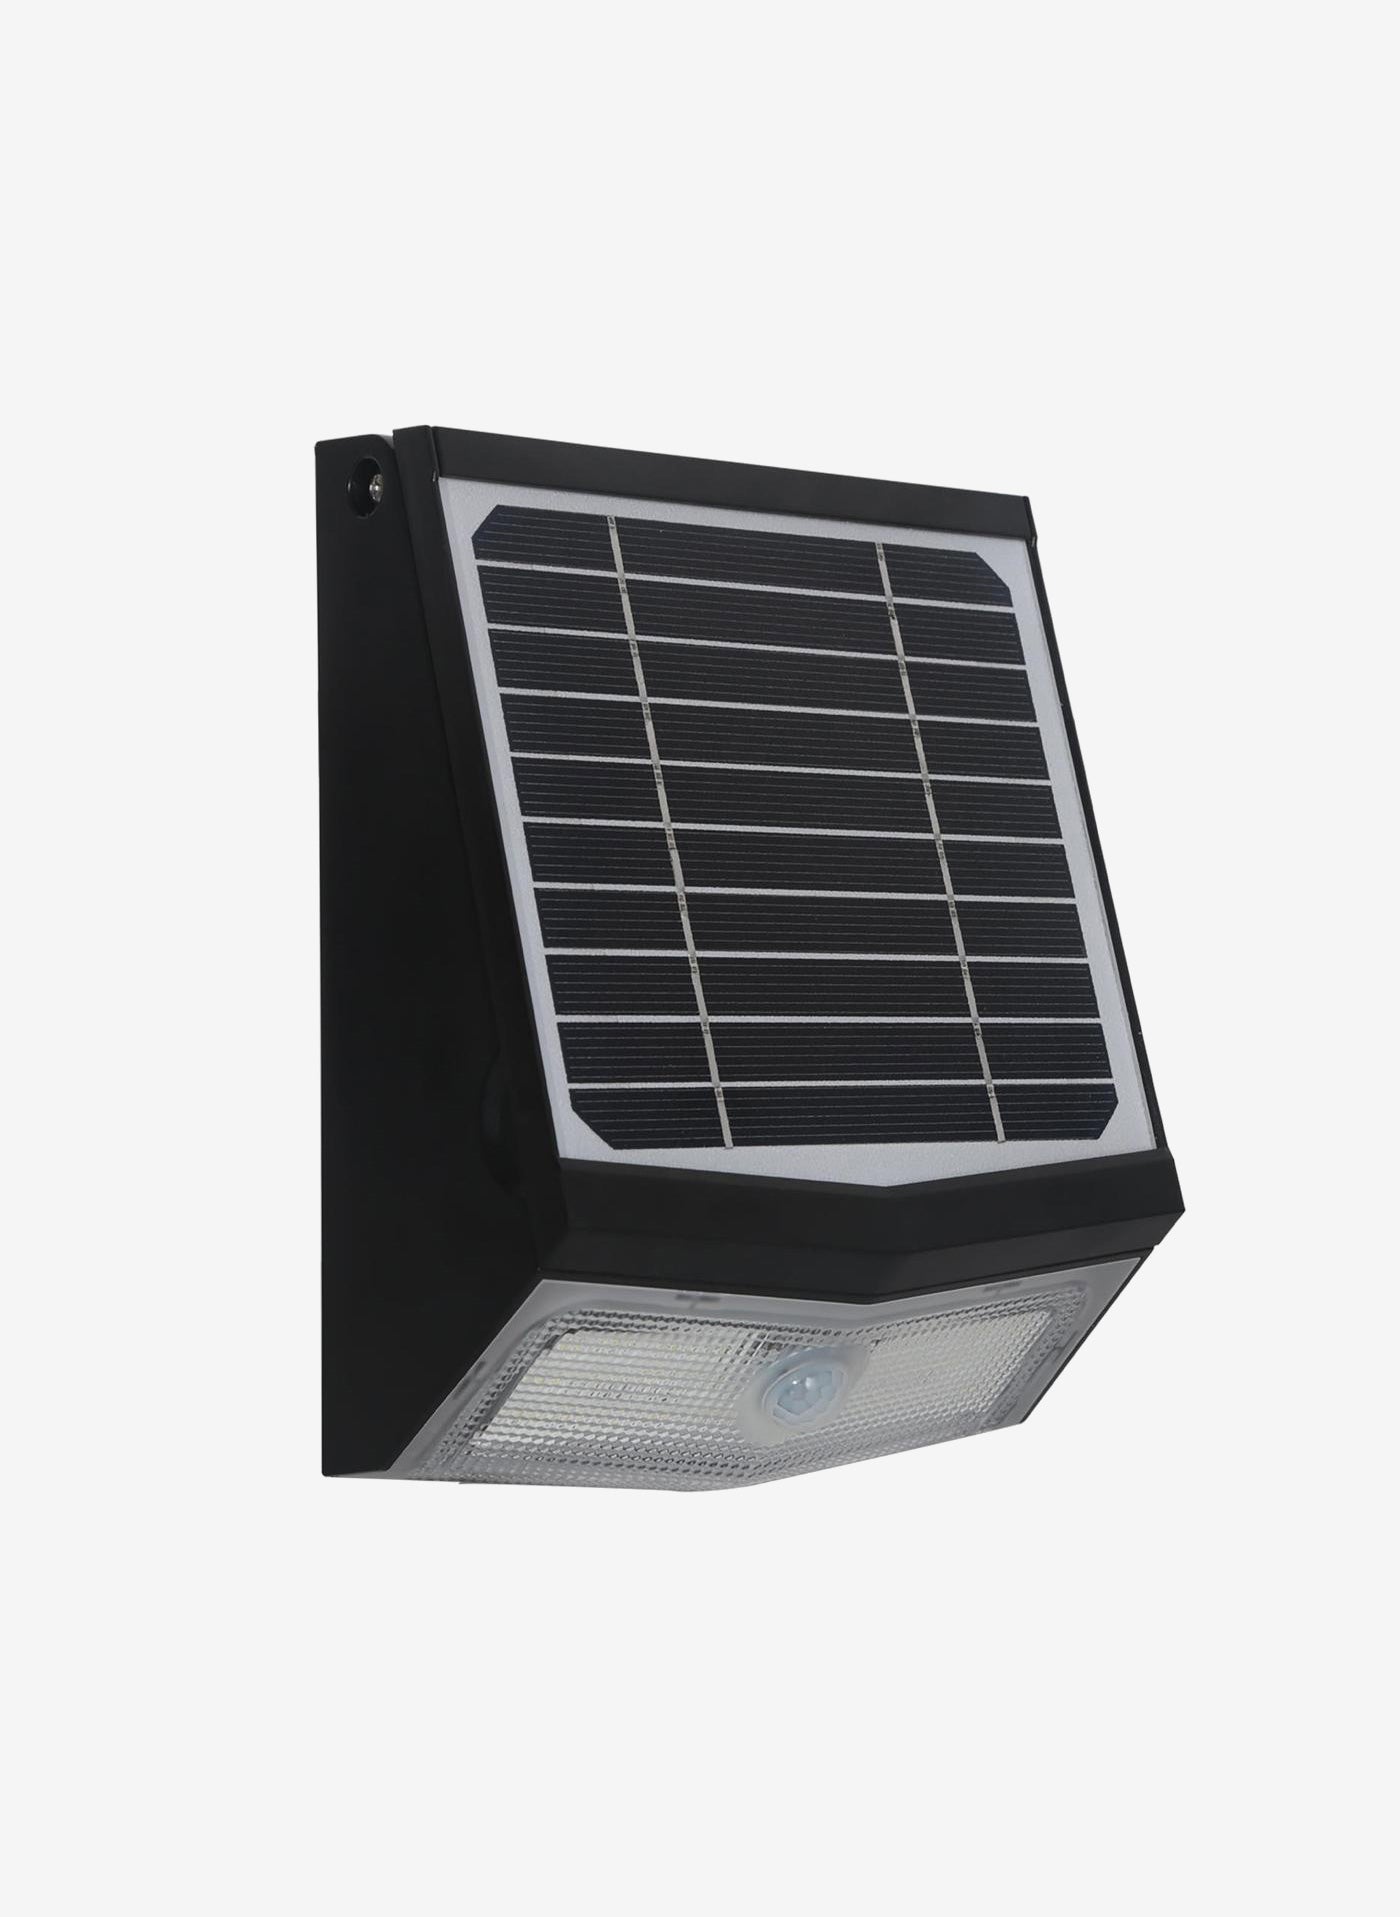 Solar Security Wall Light Motion Sensor